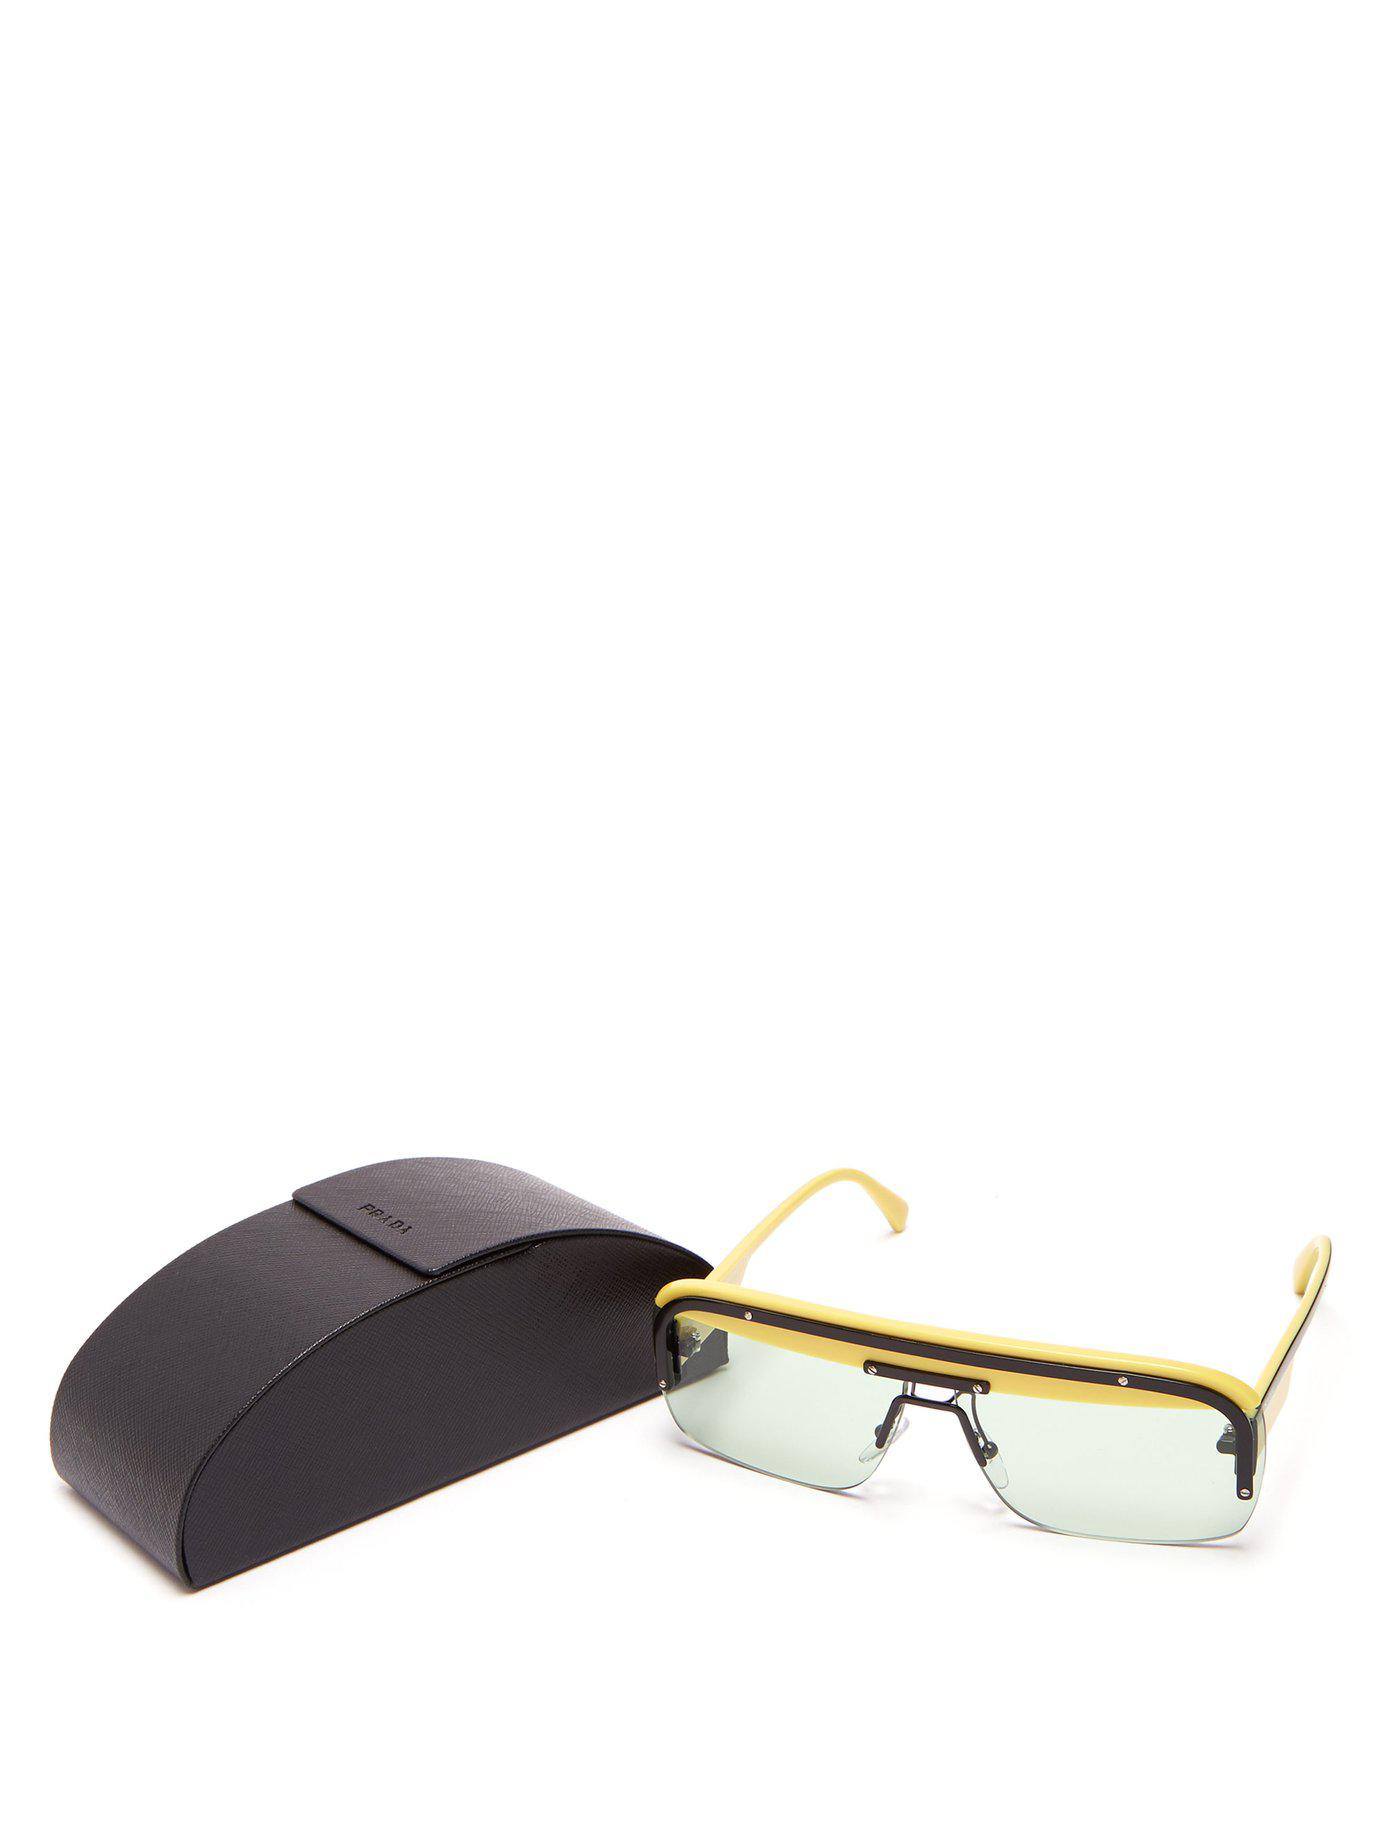 Prada Game D Frame Acetate Sunglasses in Yellow for Men - Lyst